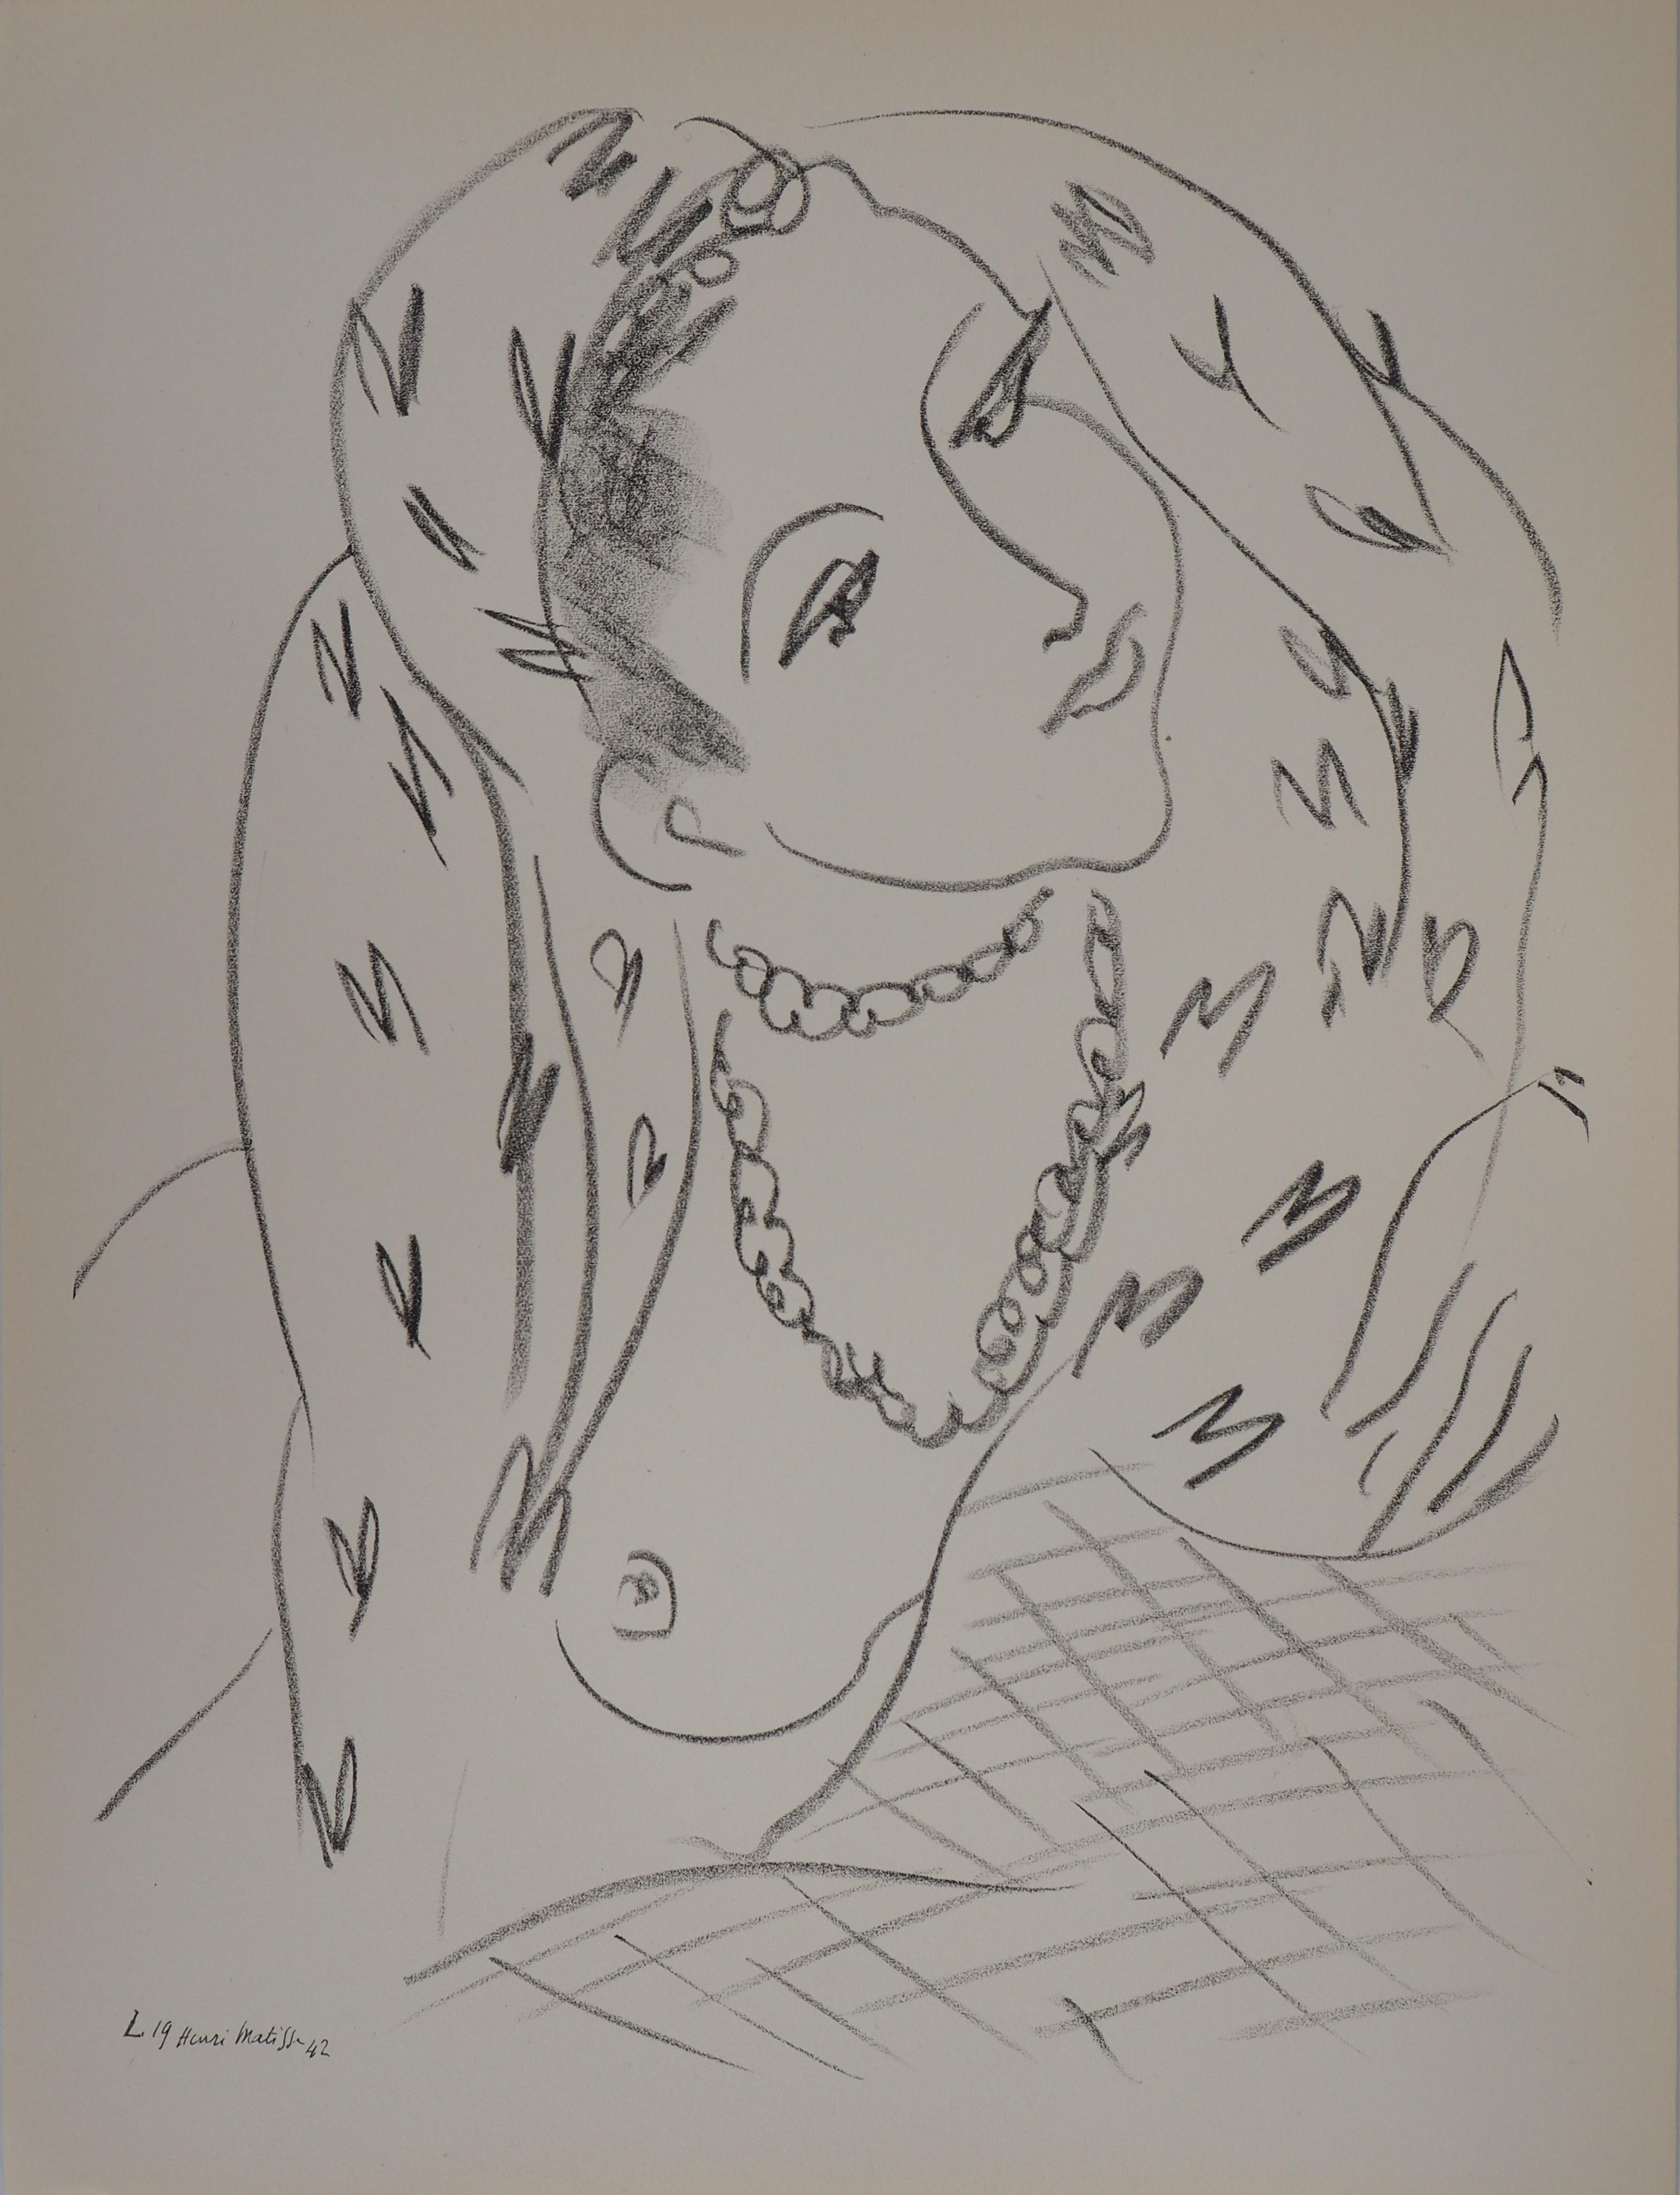 (after) Henri Matisse Portrait Print - Bohemian Woman : The Fortune Teller - Lithograph, 1943 